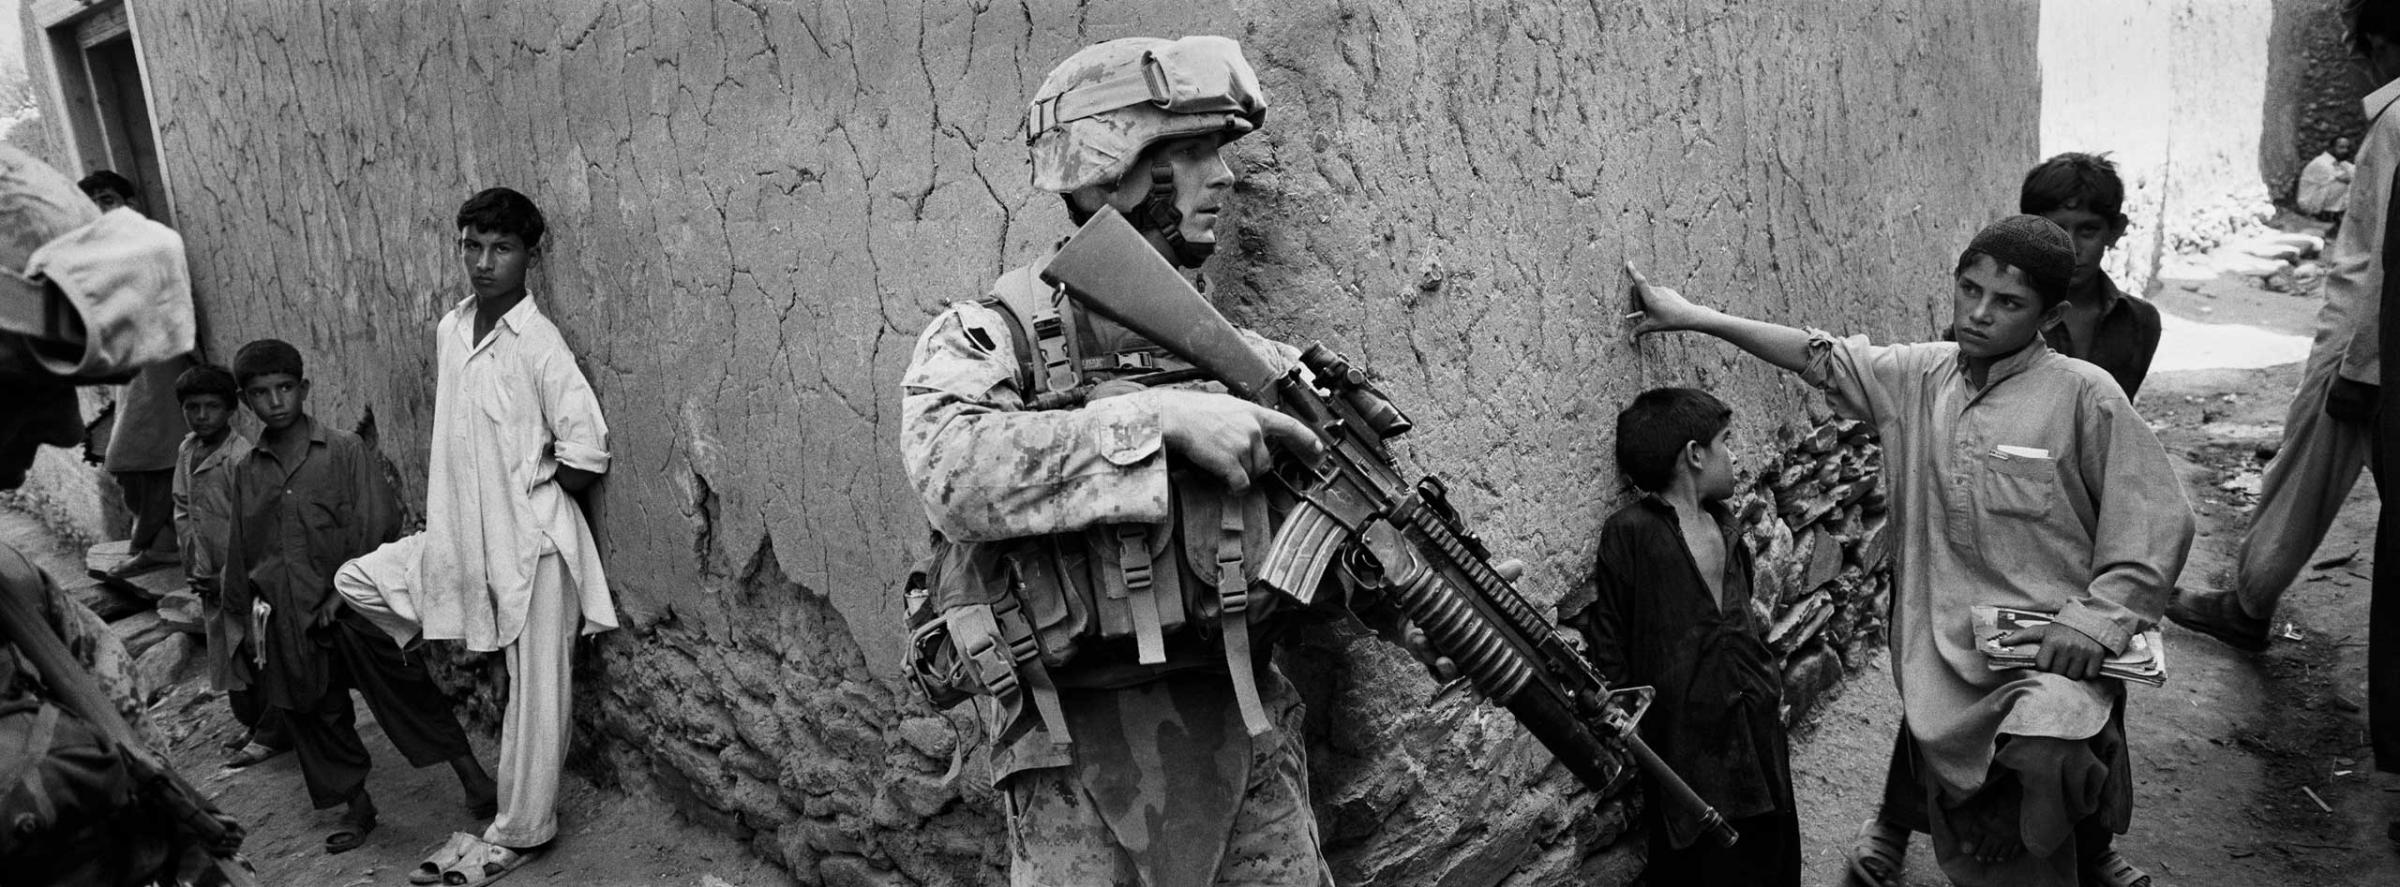 US Marines patrolling in Asadabad, Kunar province, Afghanistan, 2005.